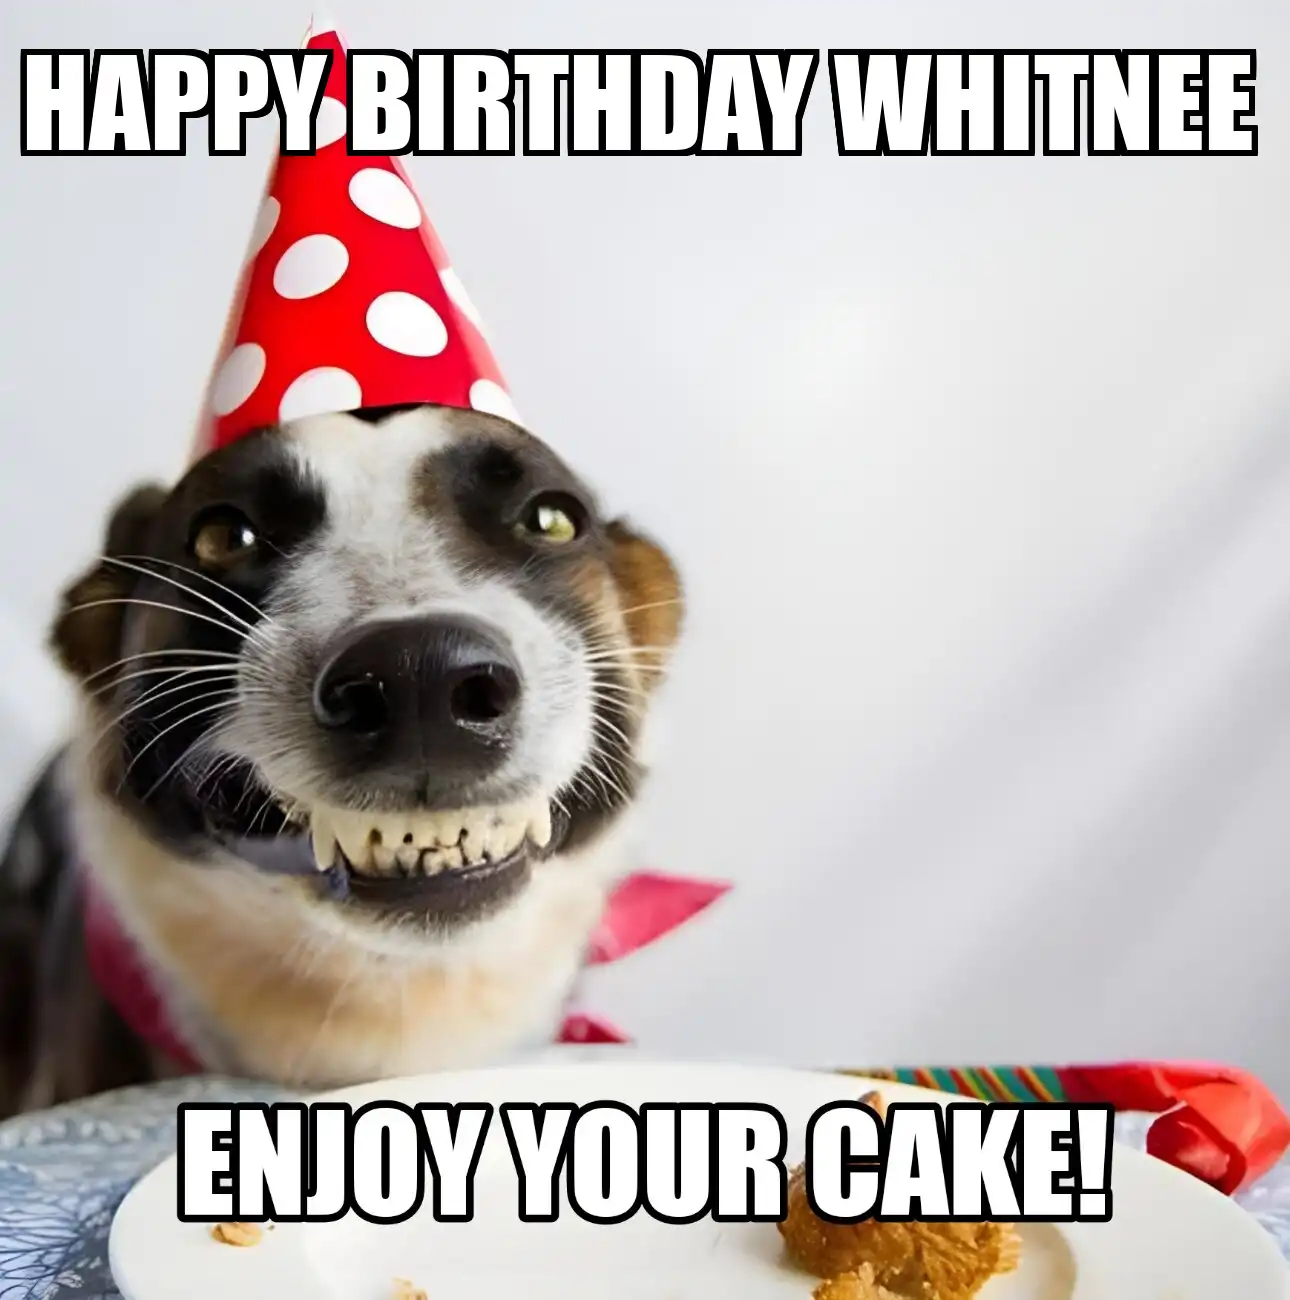 Happy Birthday Whitnee Enjoy Your Cake Dog Meme